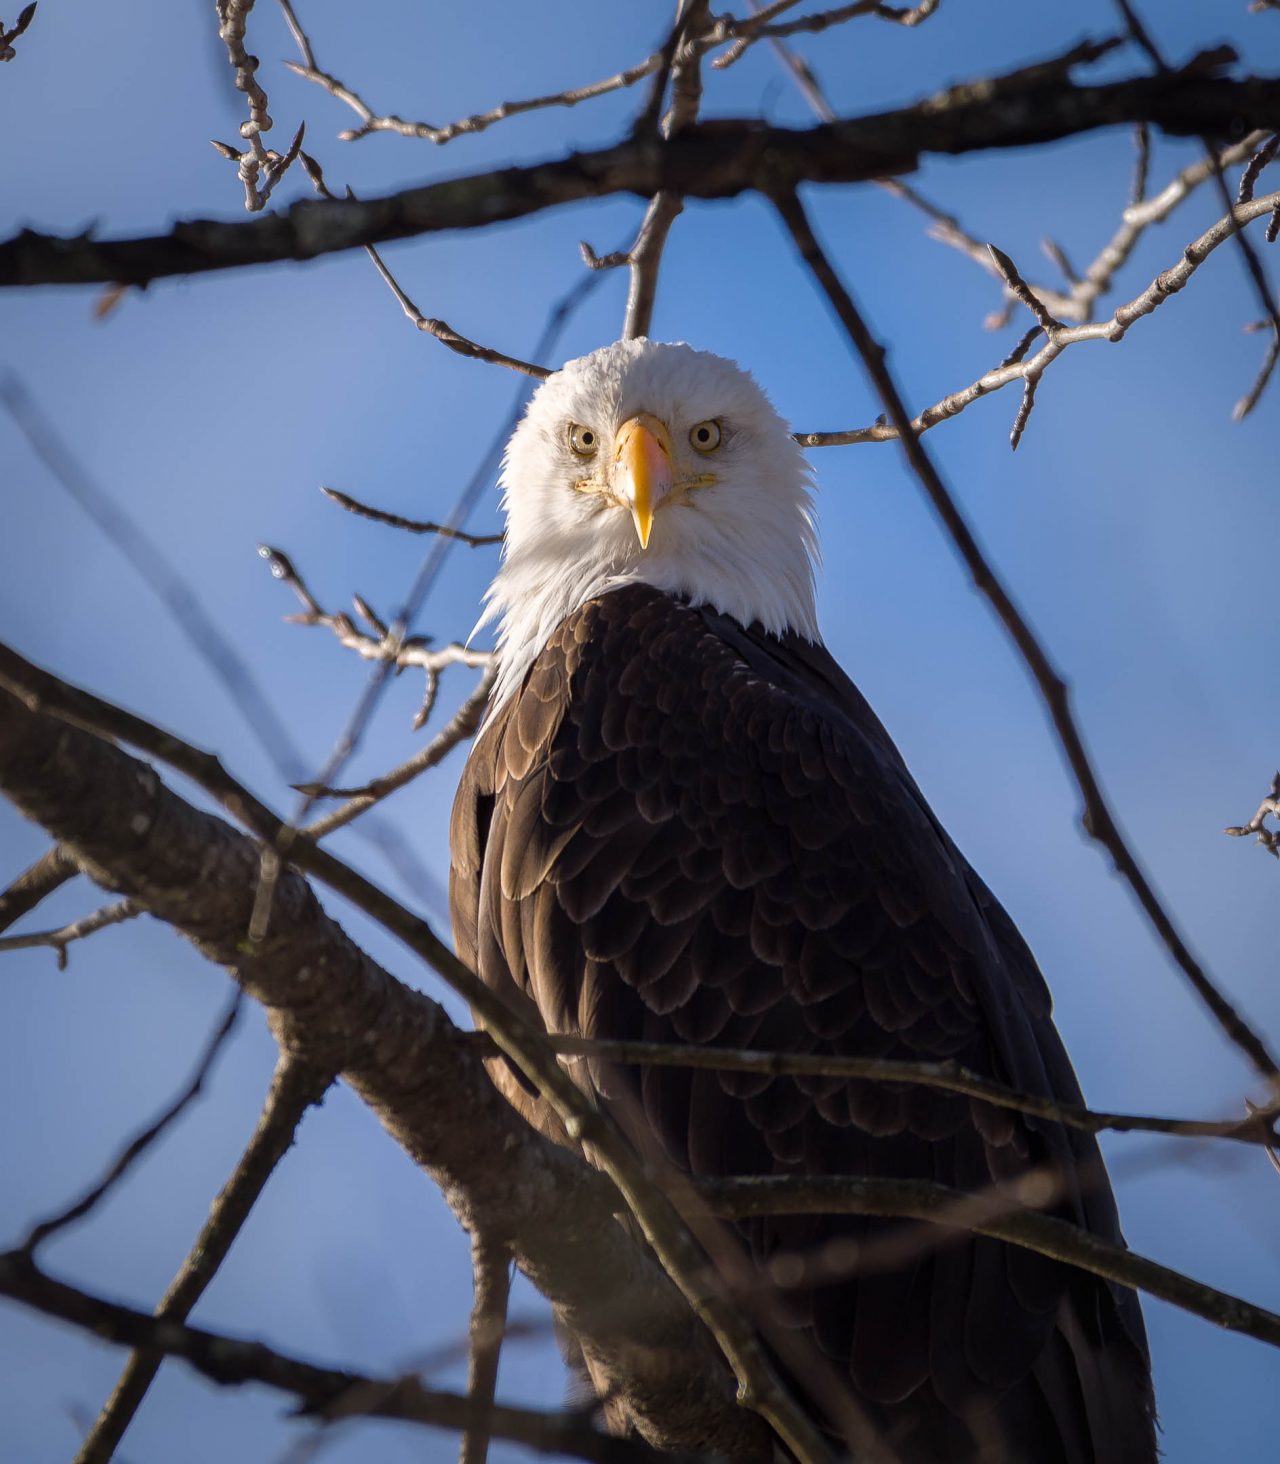 Squamish Bald Eagles : 2016-12-12 : Nikon D810 & Nikkor 200-500 : Eagle in Tree Close